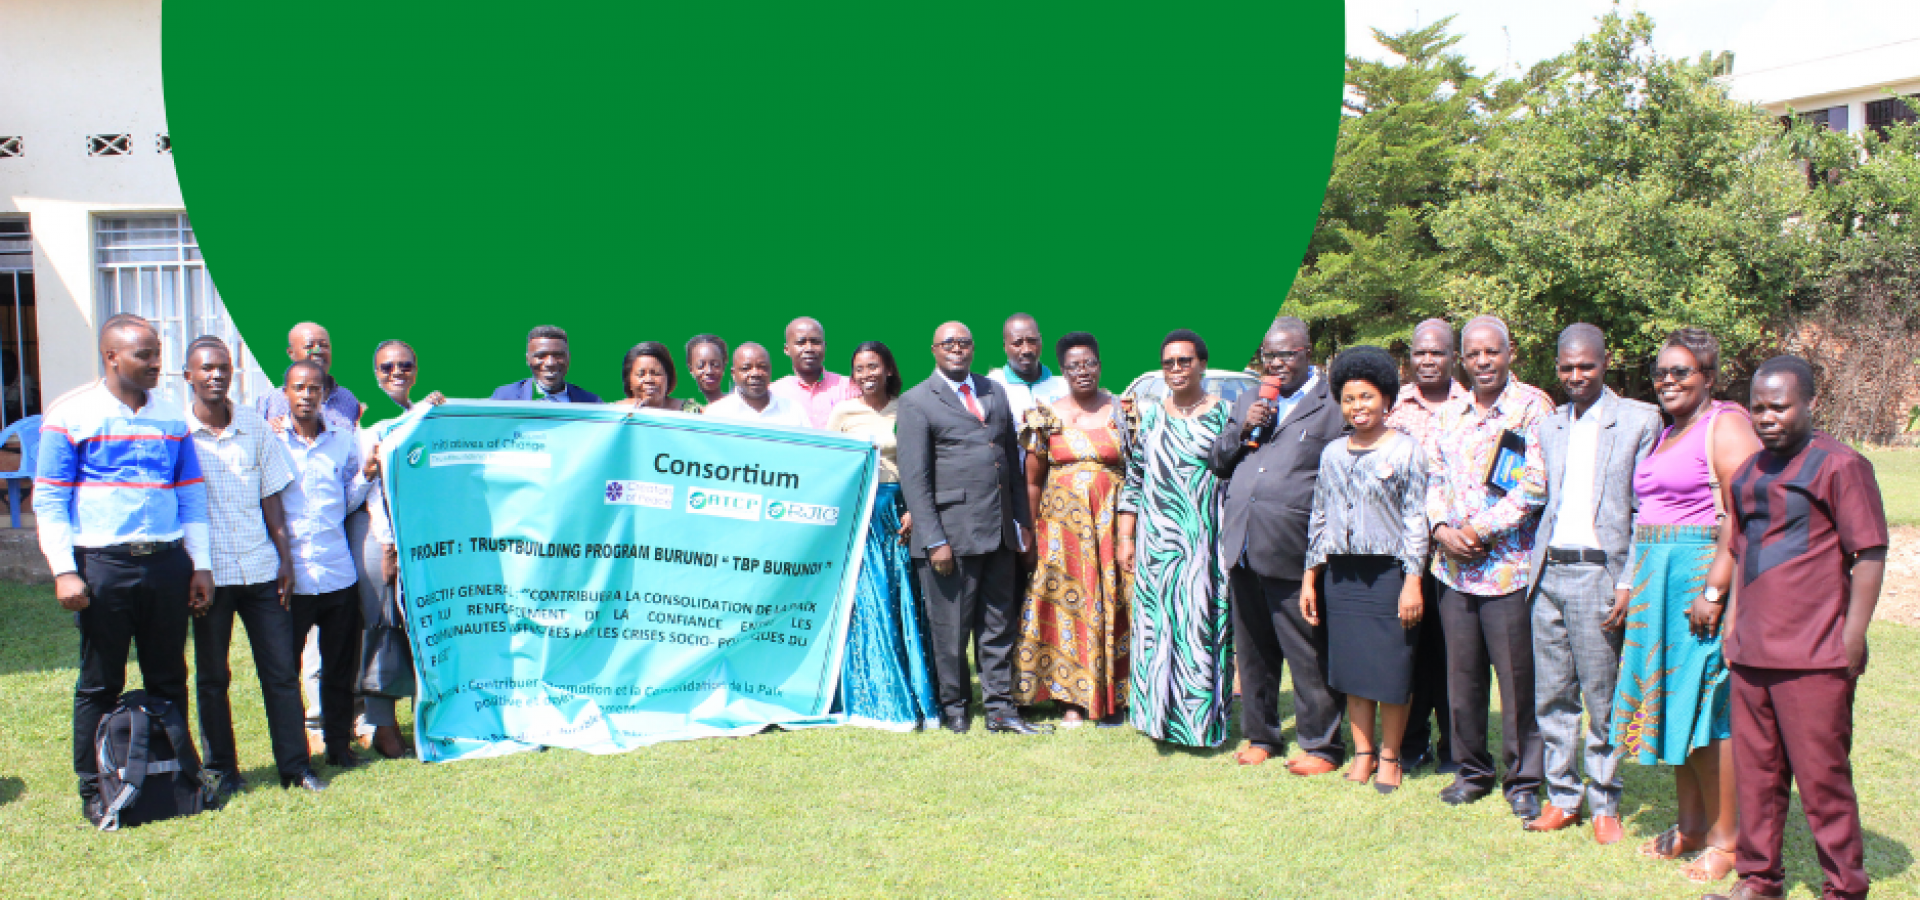 TBP Burundi launch participants